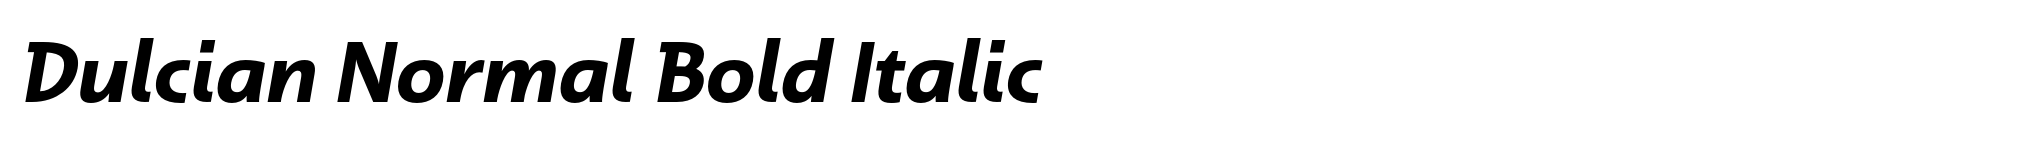 Dulcian Normal Bold Italic image